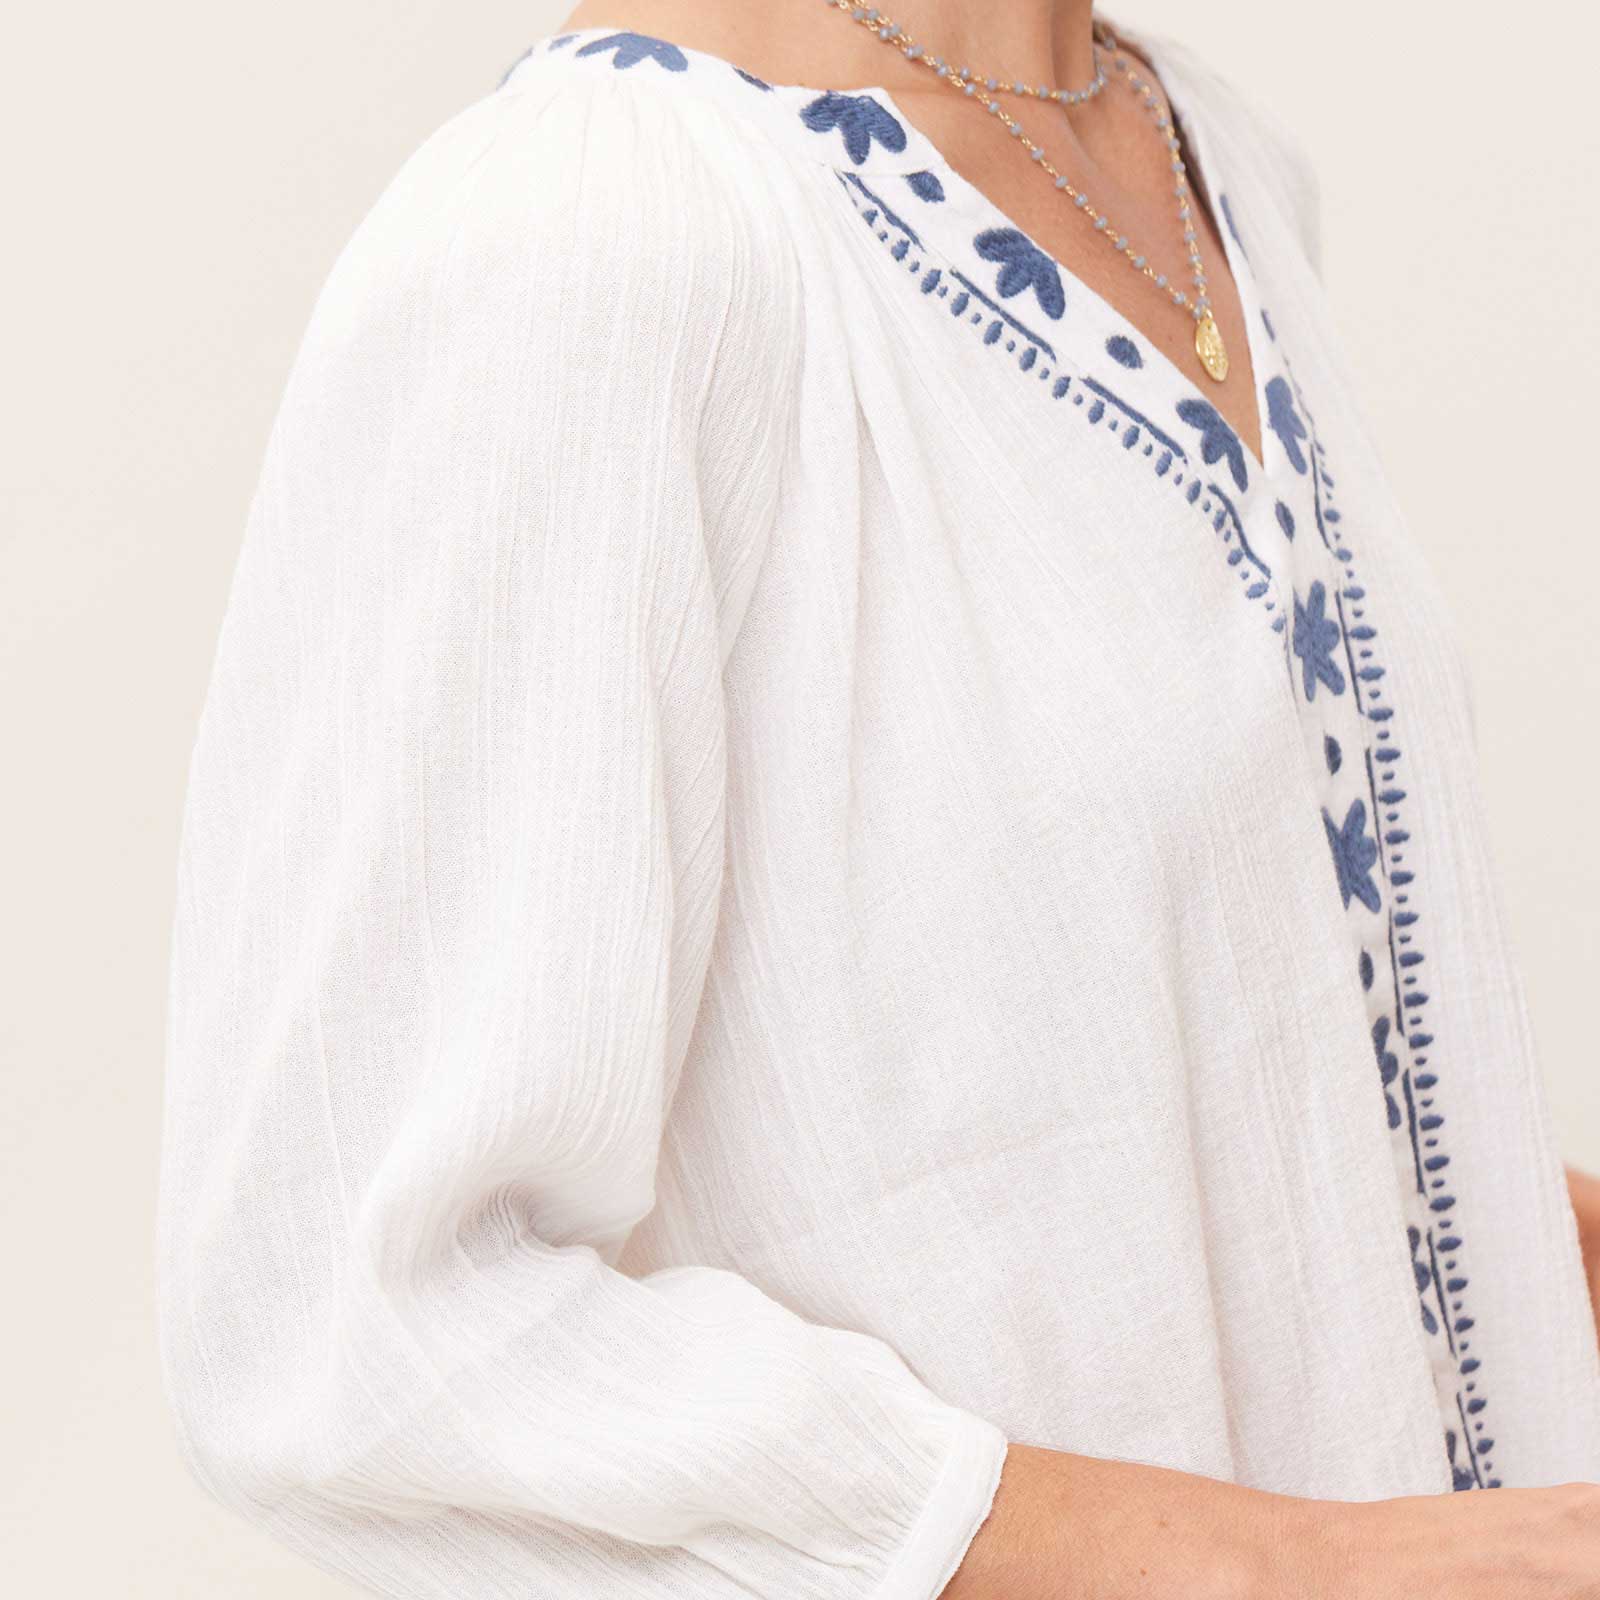 Lucky Brand Womens Embroidered Basic T-Shirt, White, Medium